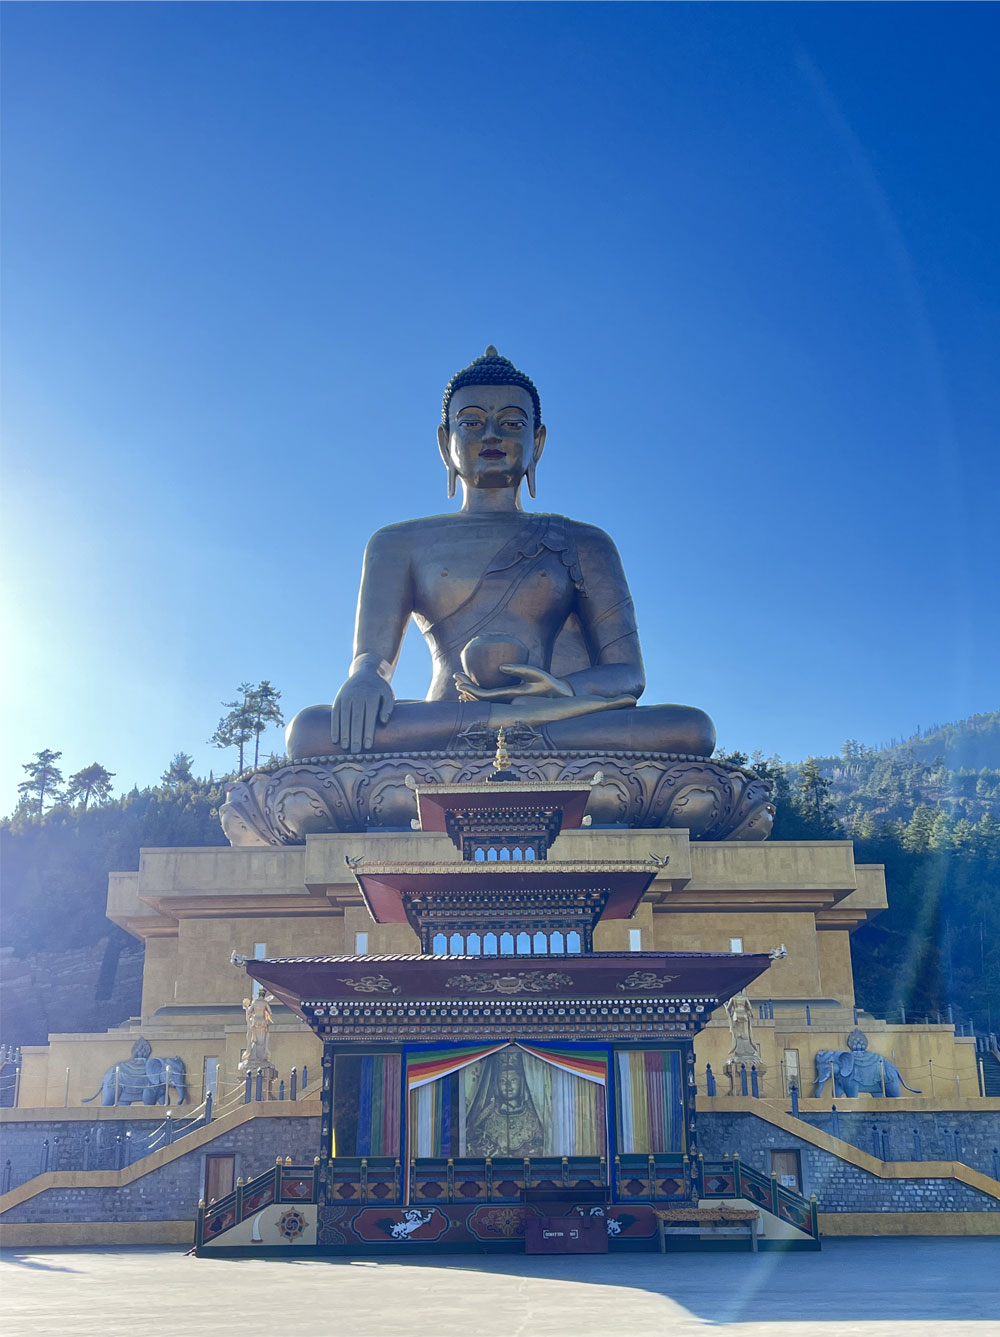 Authentic Bhutan adventures